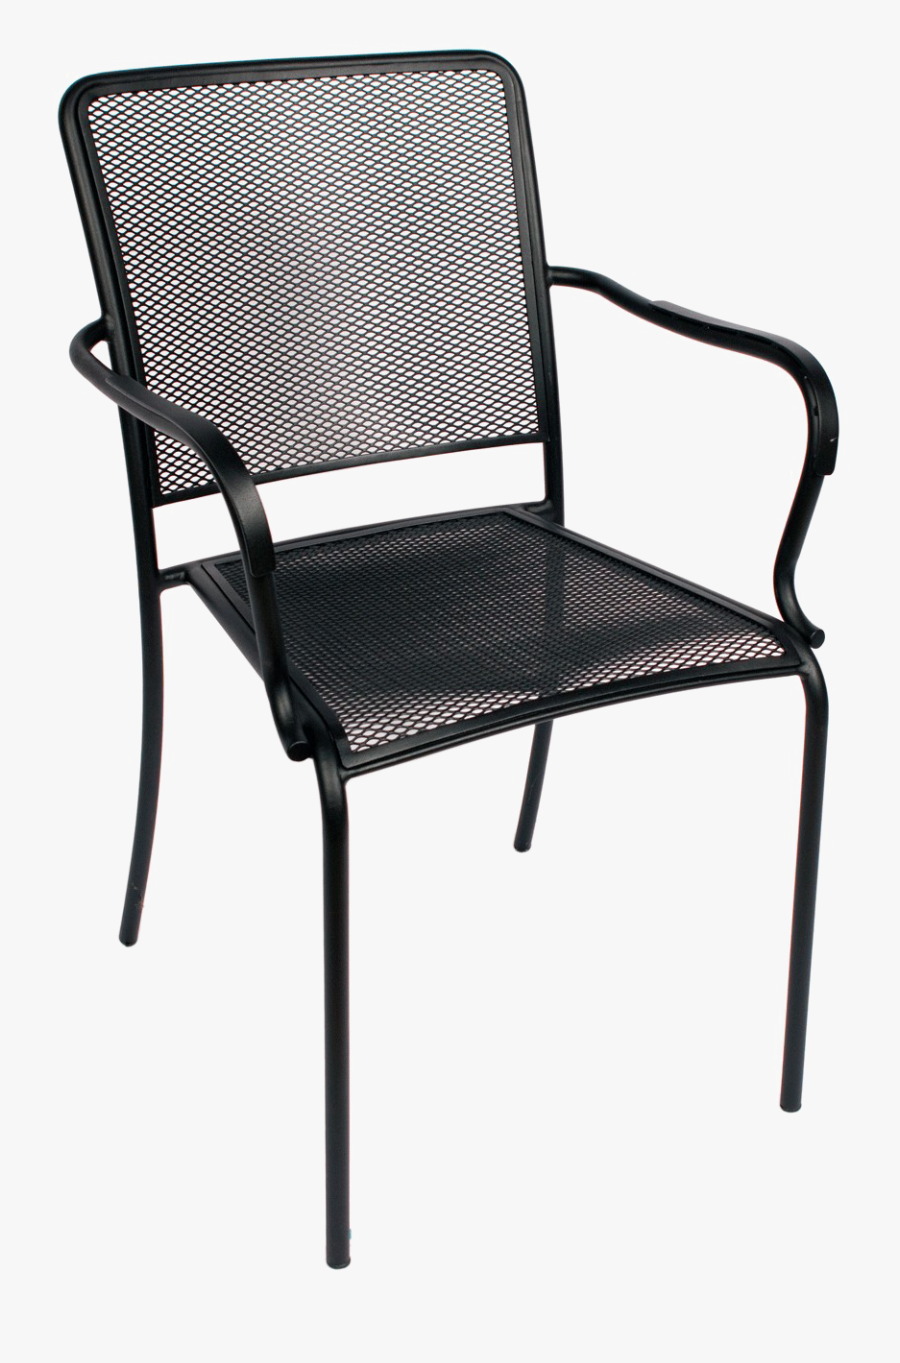 Patio Chair Png Photos - Lawn Chair Png, Transparent Clipart